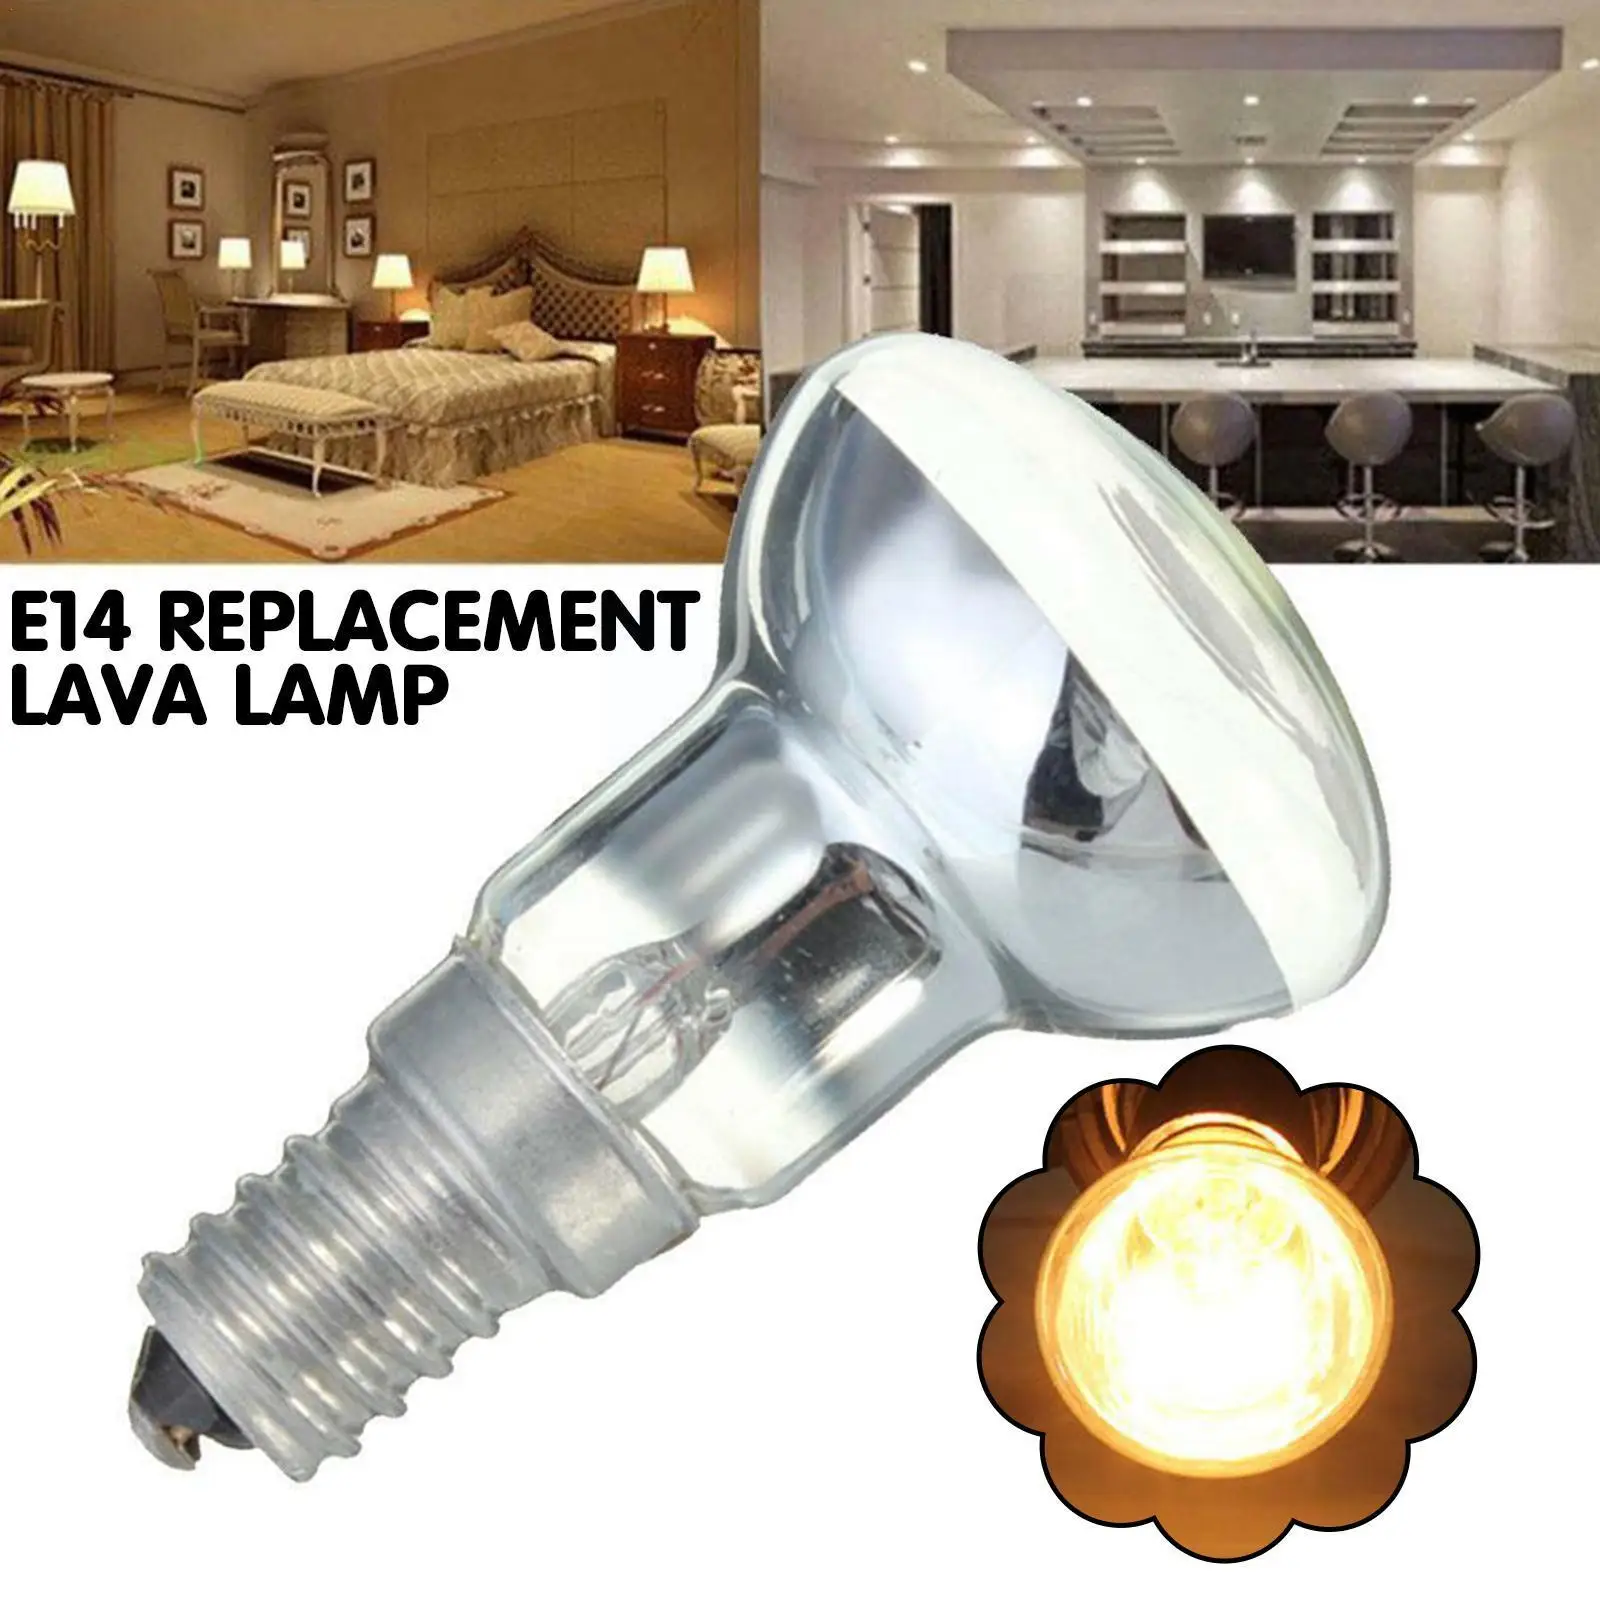 

E14 R39 25W Replacement Lava Lamp Spotlight Screw In Reflector Light Bulbs Clear Light Incandescent Lava Bulbs Bulb Spot Li Y7W0